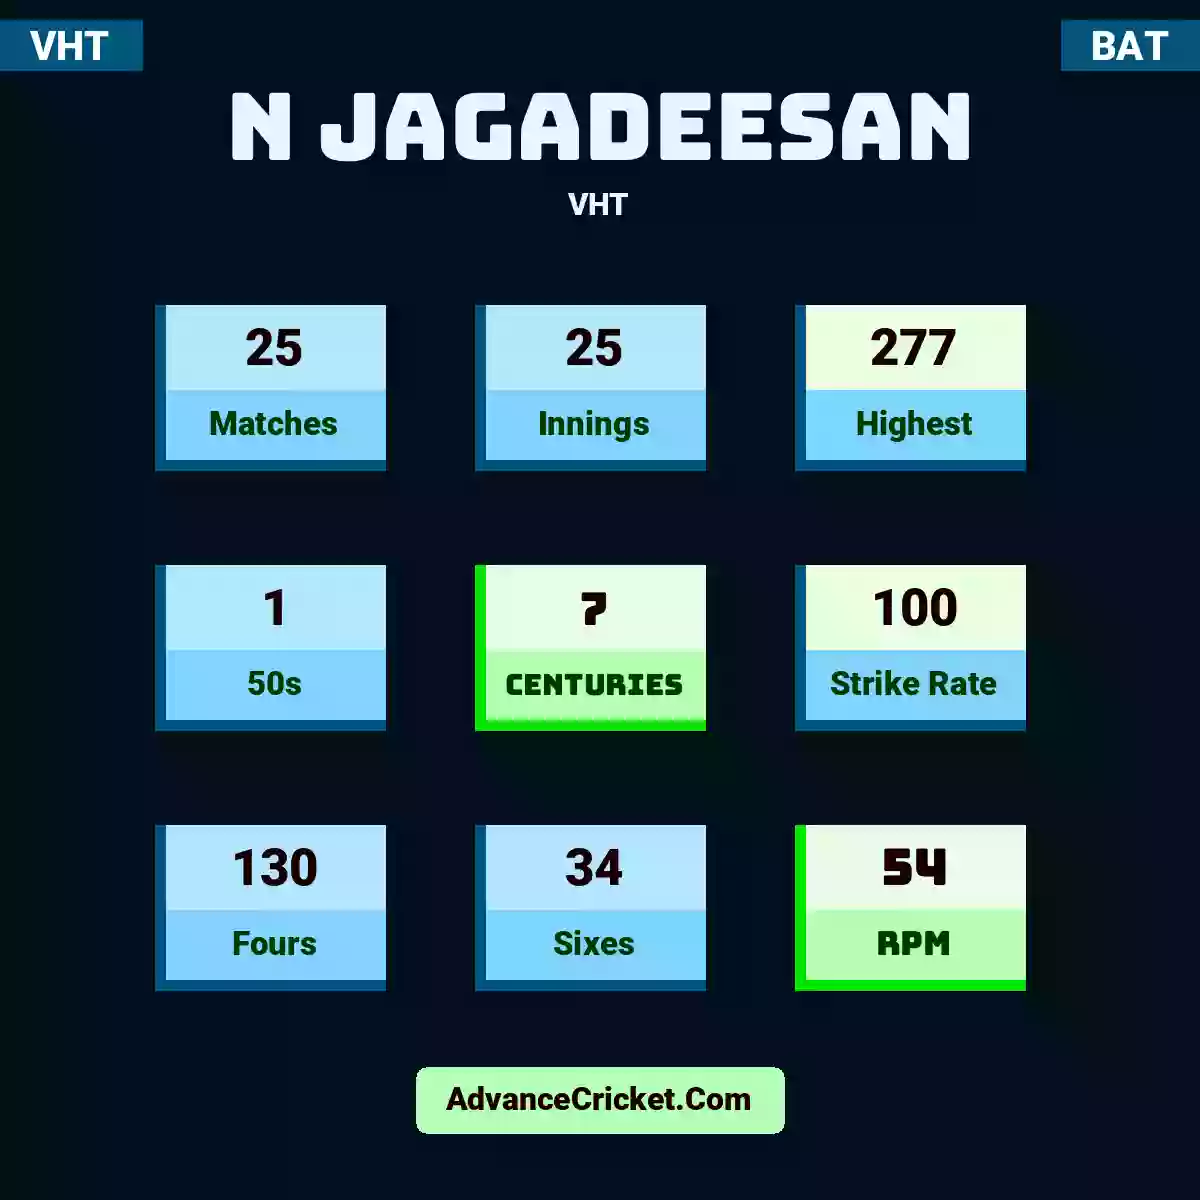 N Jagadeesan VHT , N Jagadeesan played 25 matches, scored 277 runs as highest, 1 half-centuries, and 7 centuries, with a strike rate of 100. N.Jagadeesan hit 130 fours and 34 sixes, with an RPM of 54.